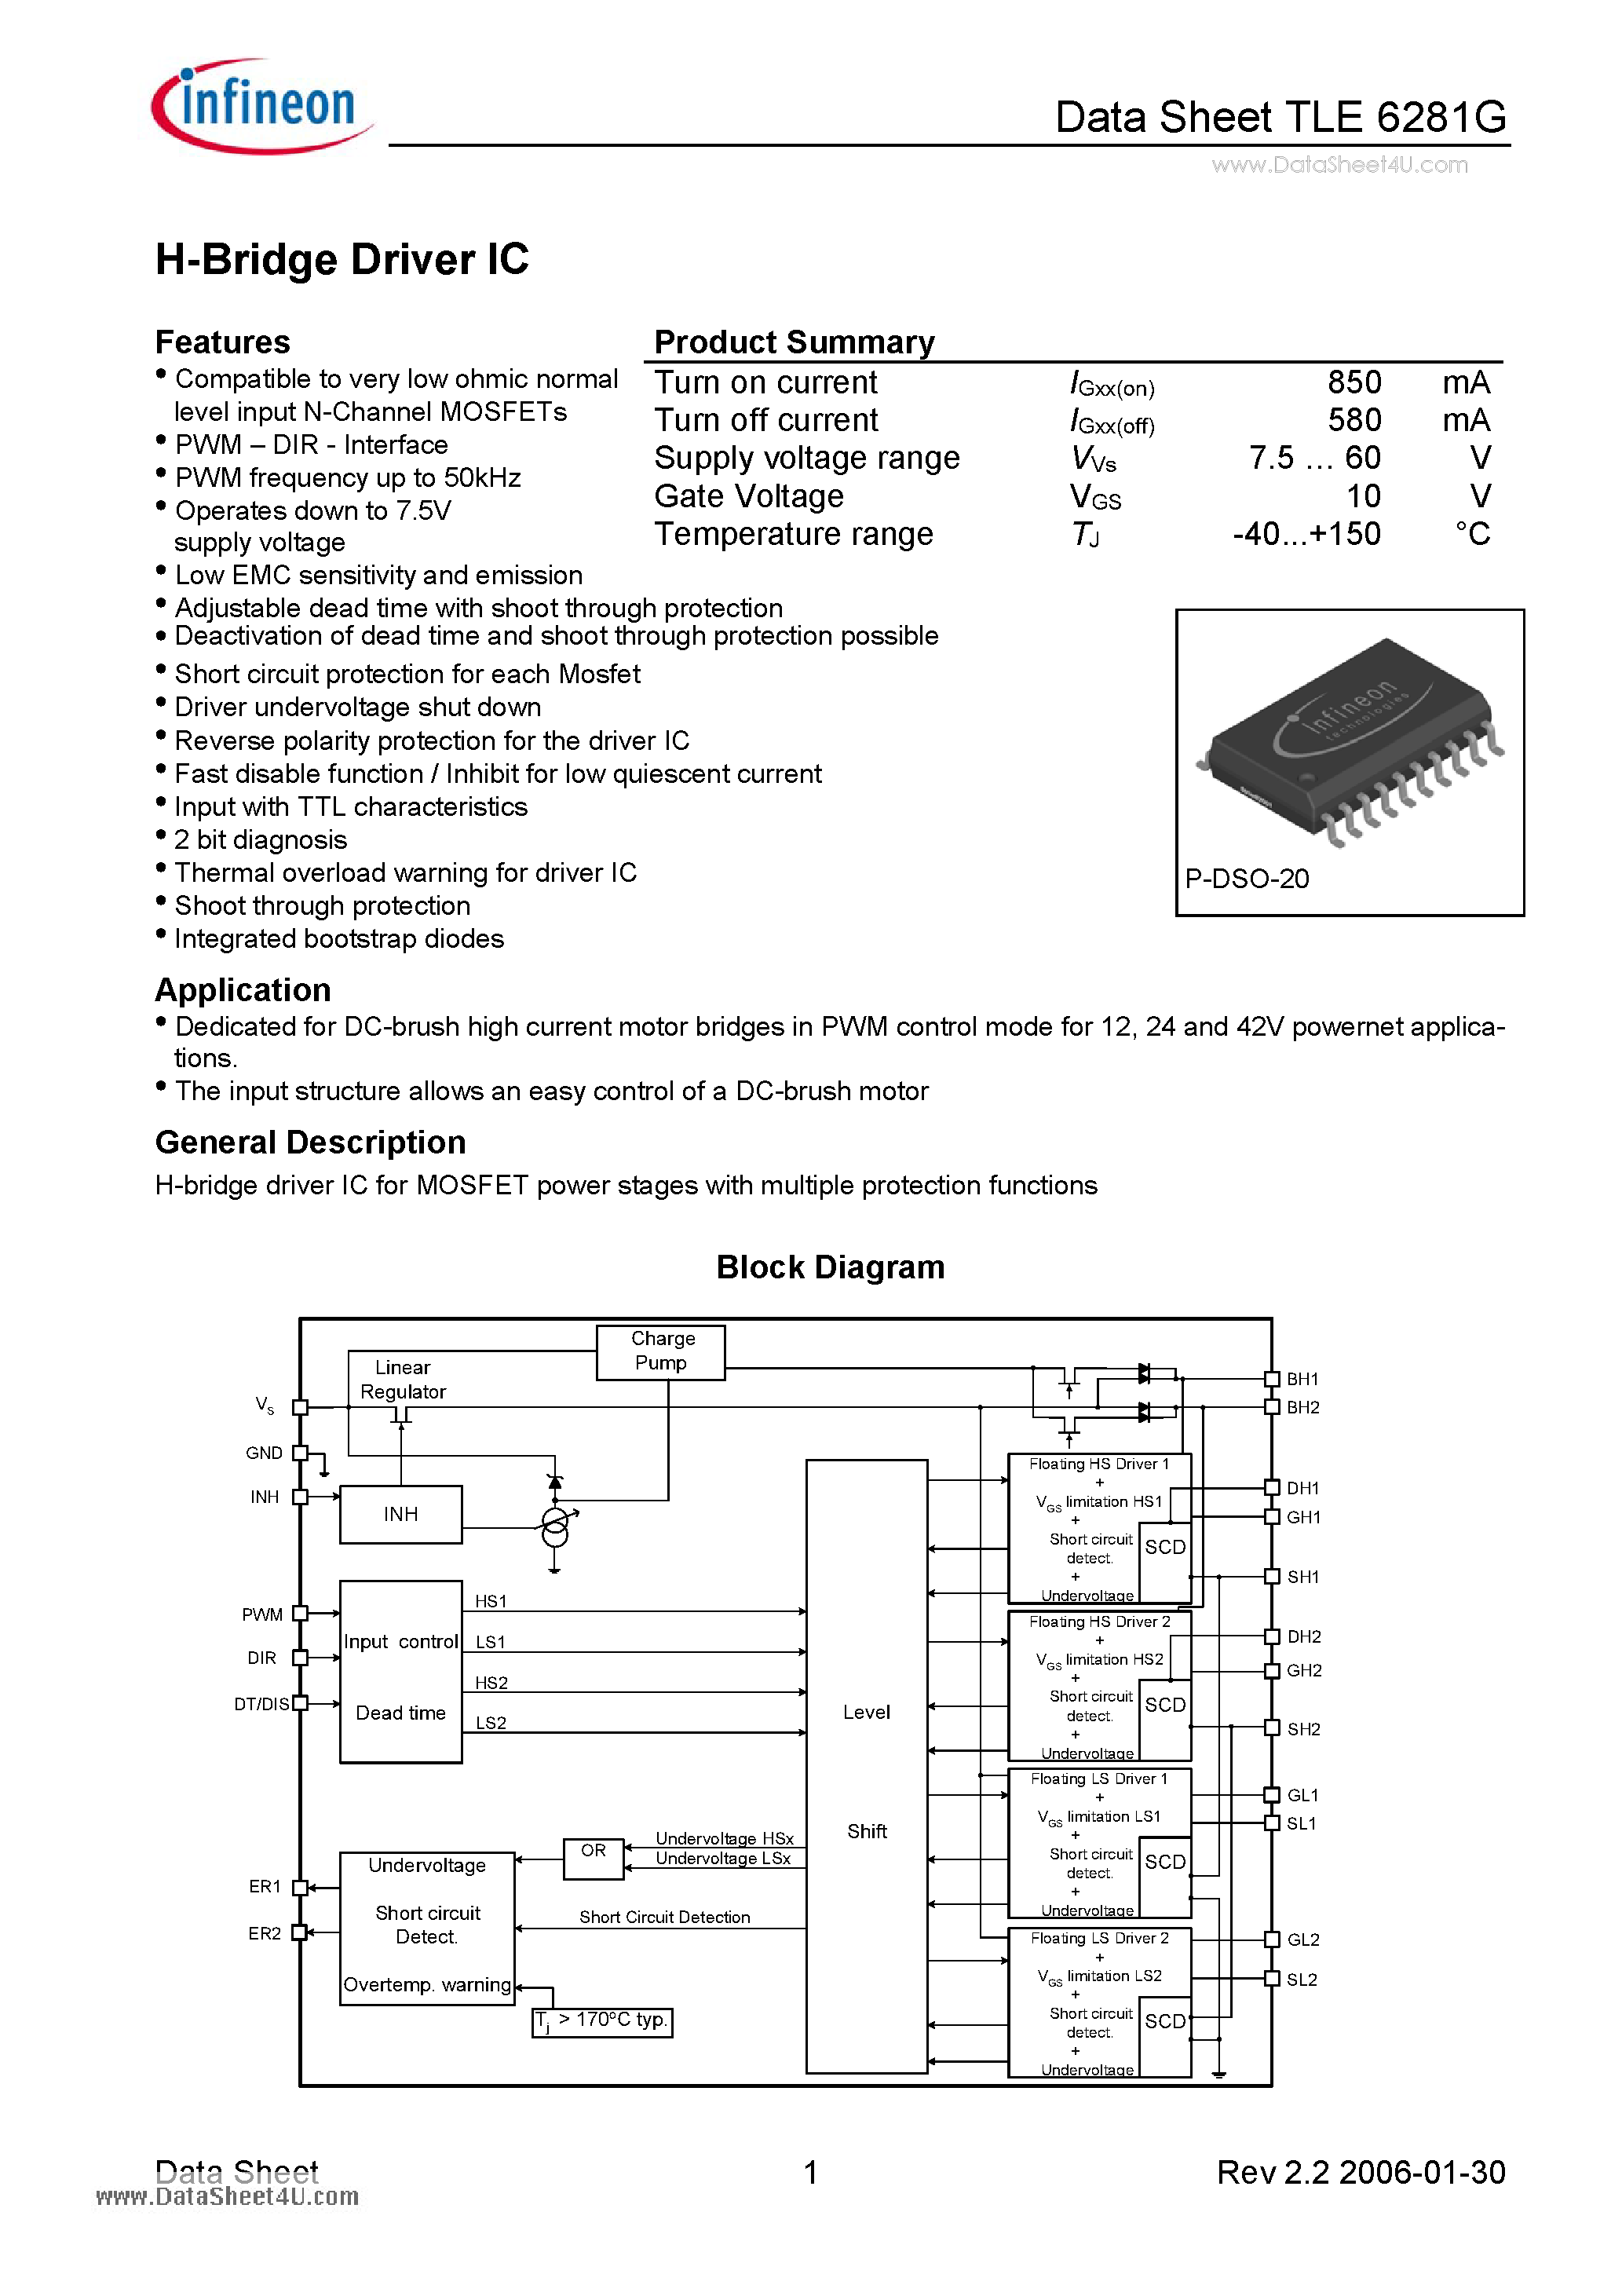 Datasheet TLE6281G - H-Bridge Driver IC page 1